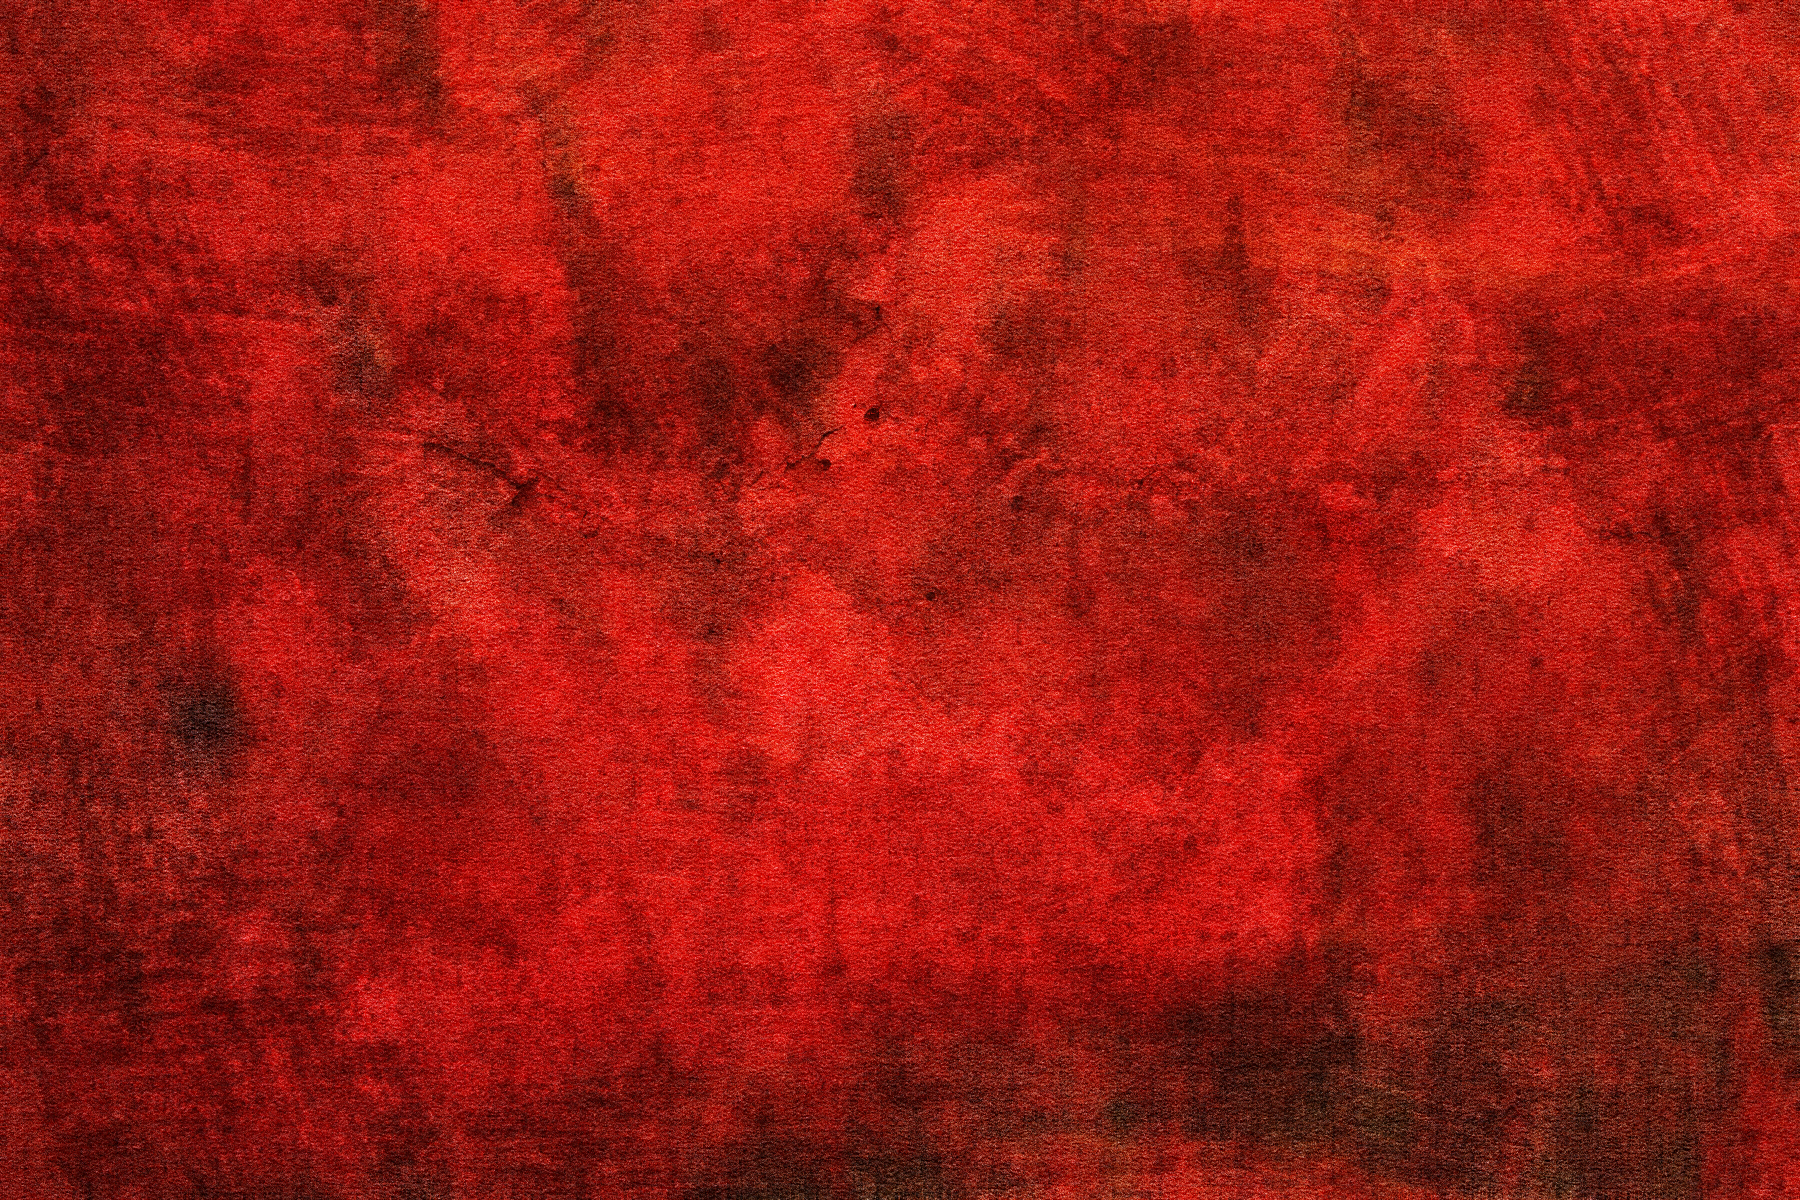  Red Texture Textures Geprek Wallpaper 1800x1200 Full HD Wallpapers